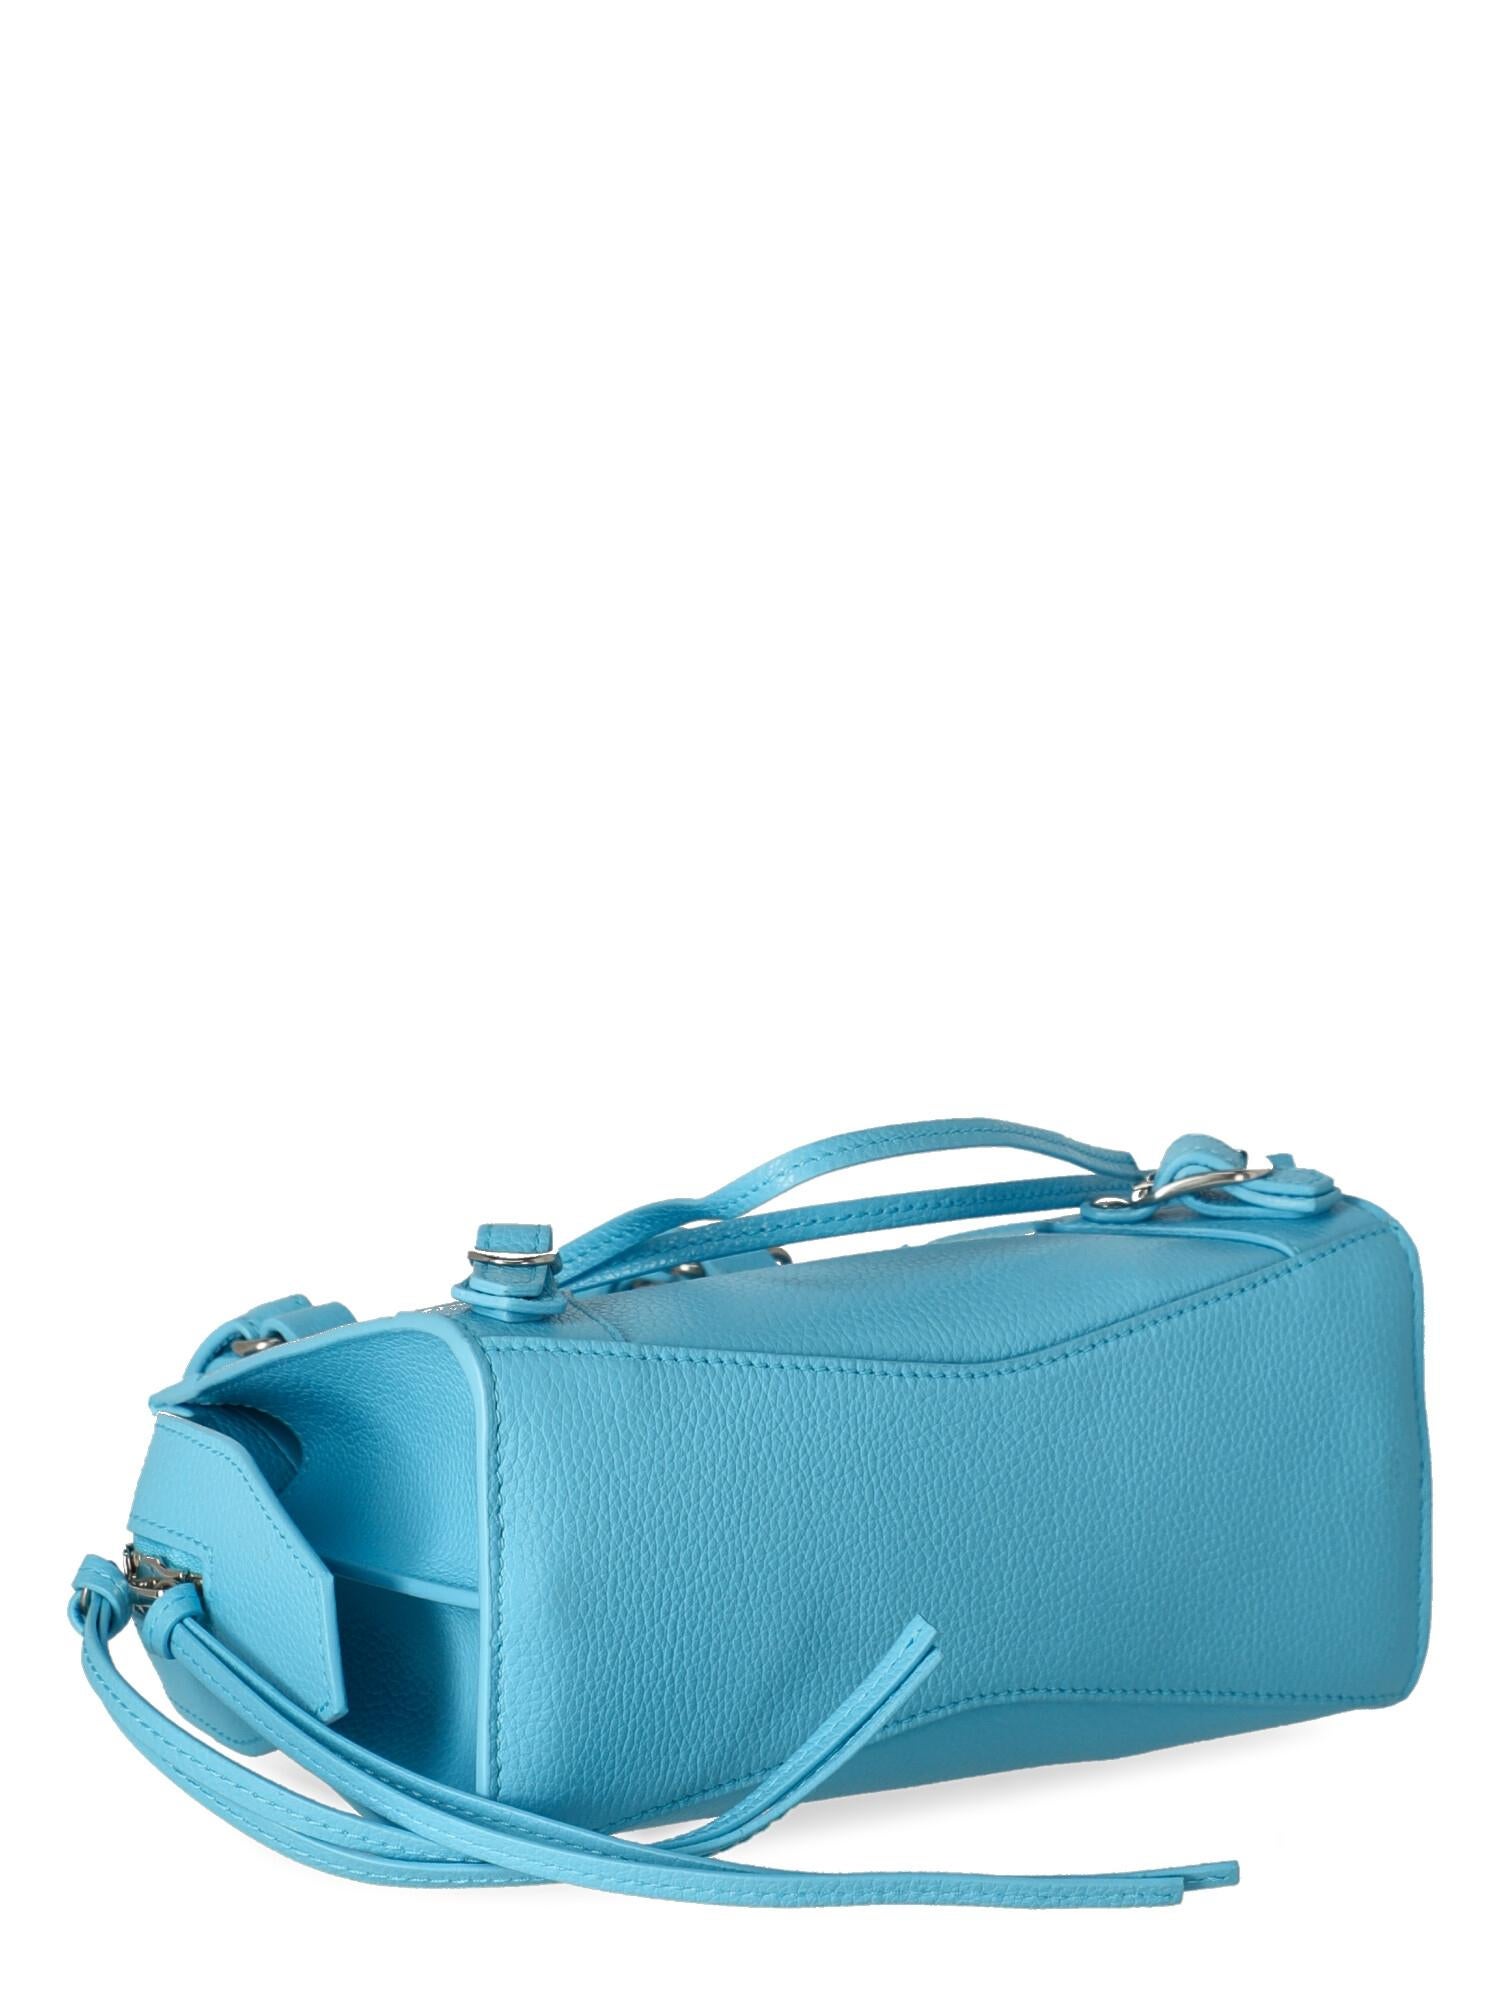 blue leather purses